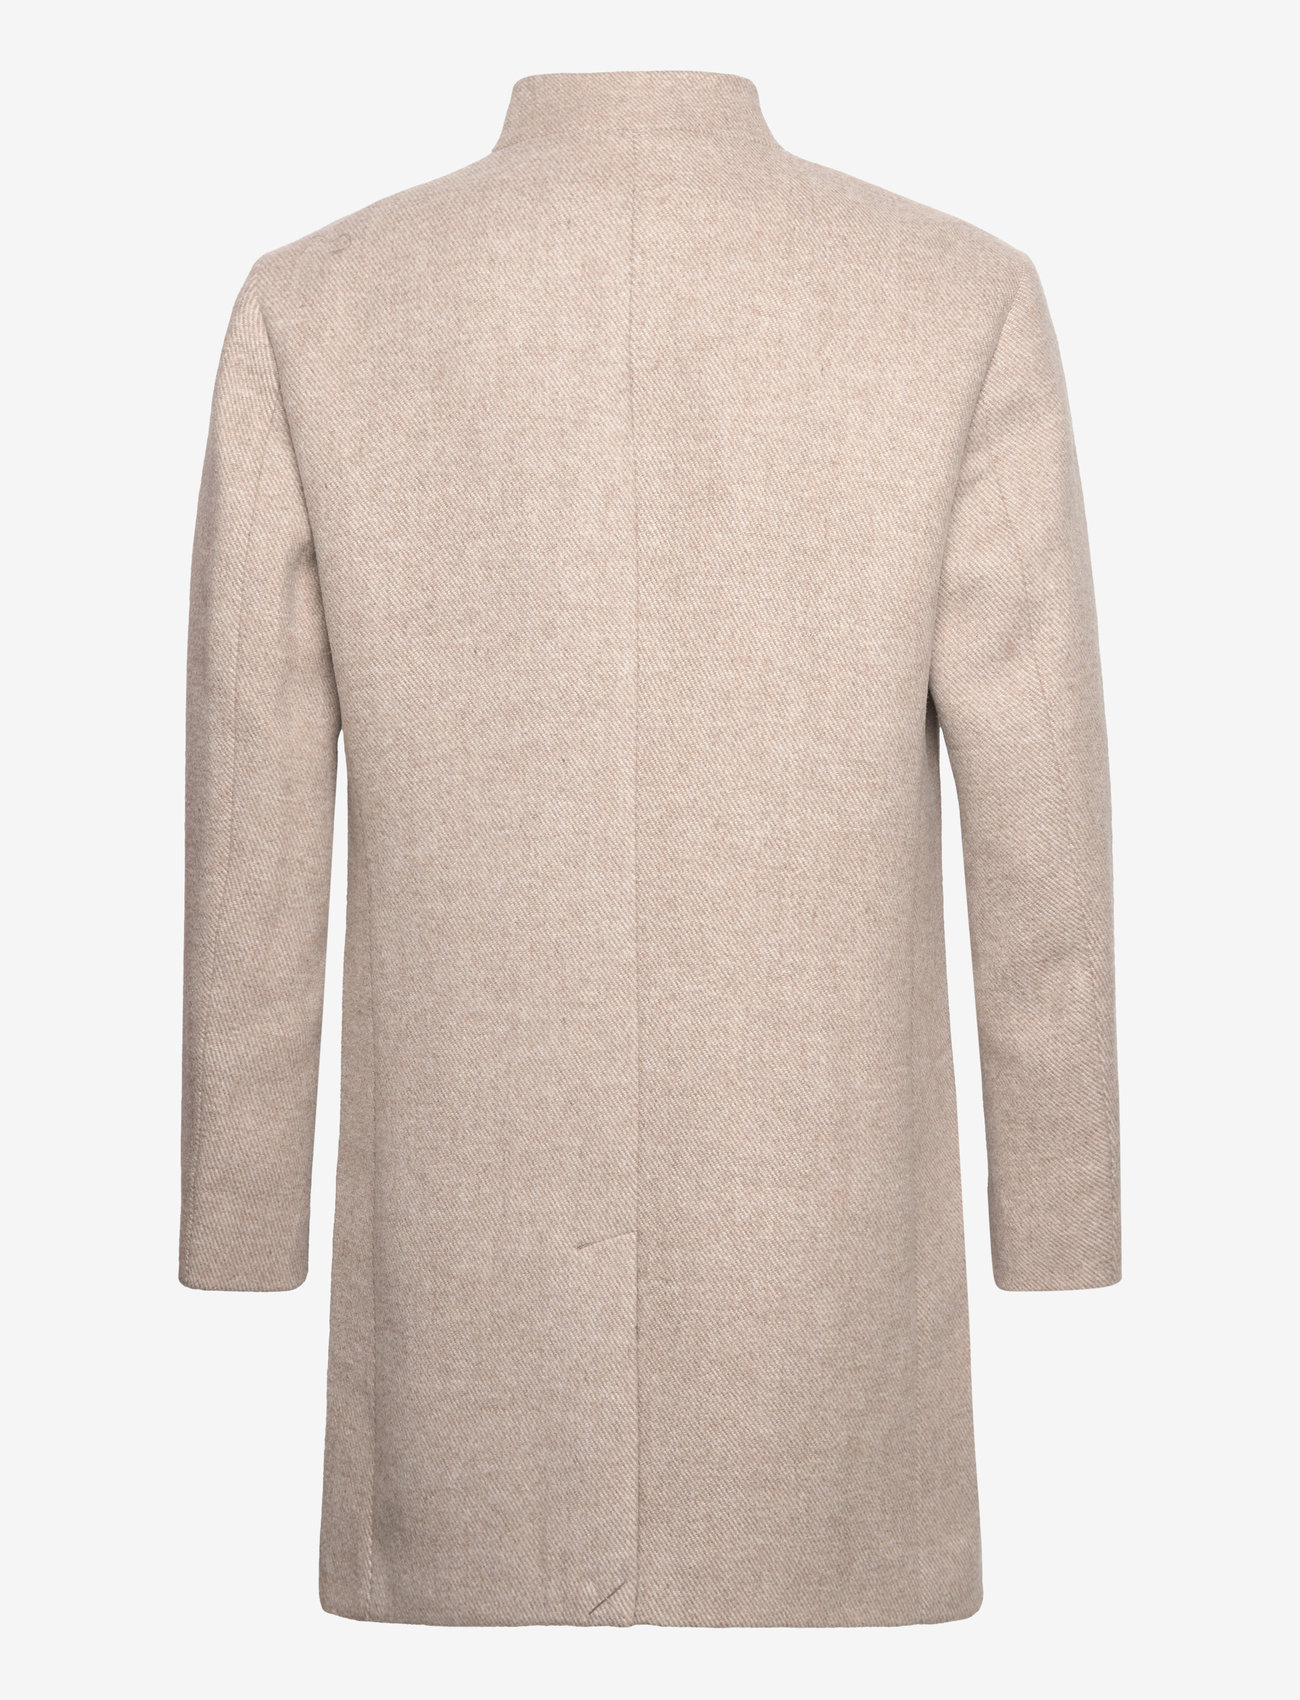 Tom Tailor - three button wool coat - talvitakit - sand off white twill structure - 1